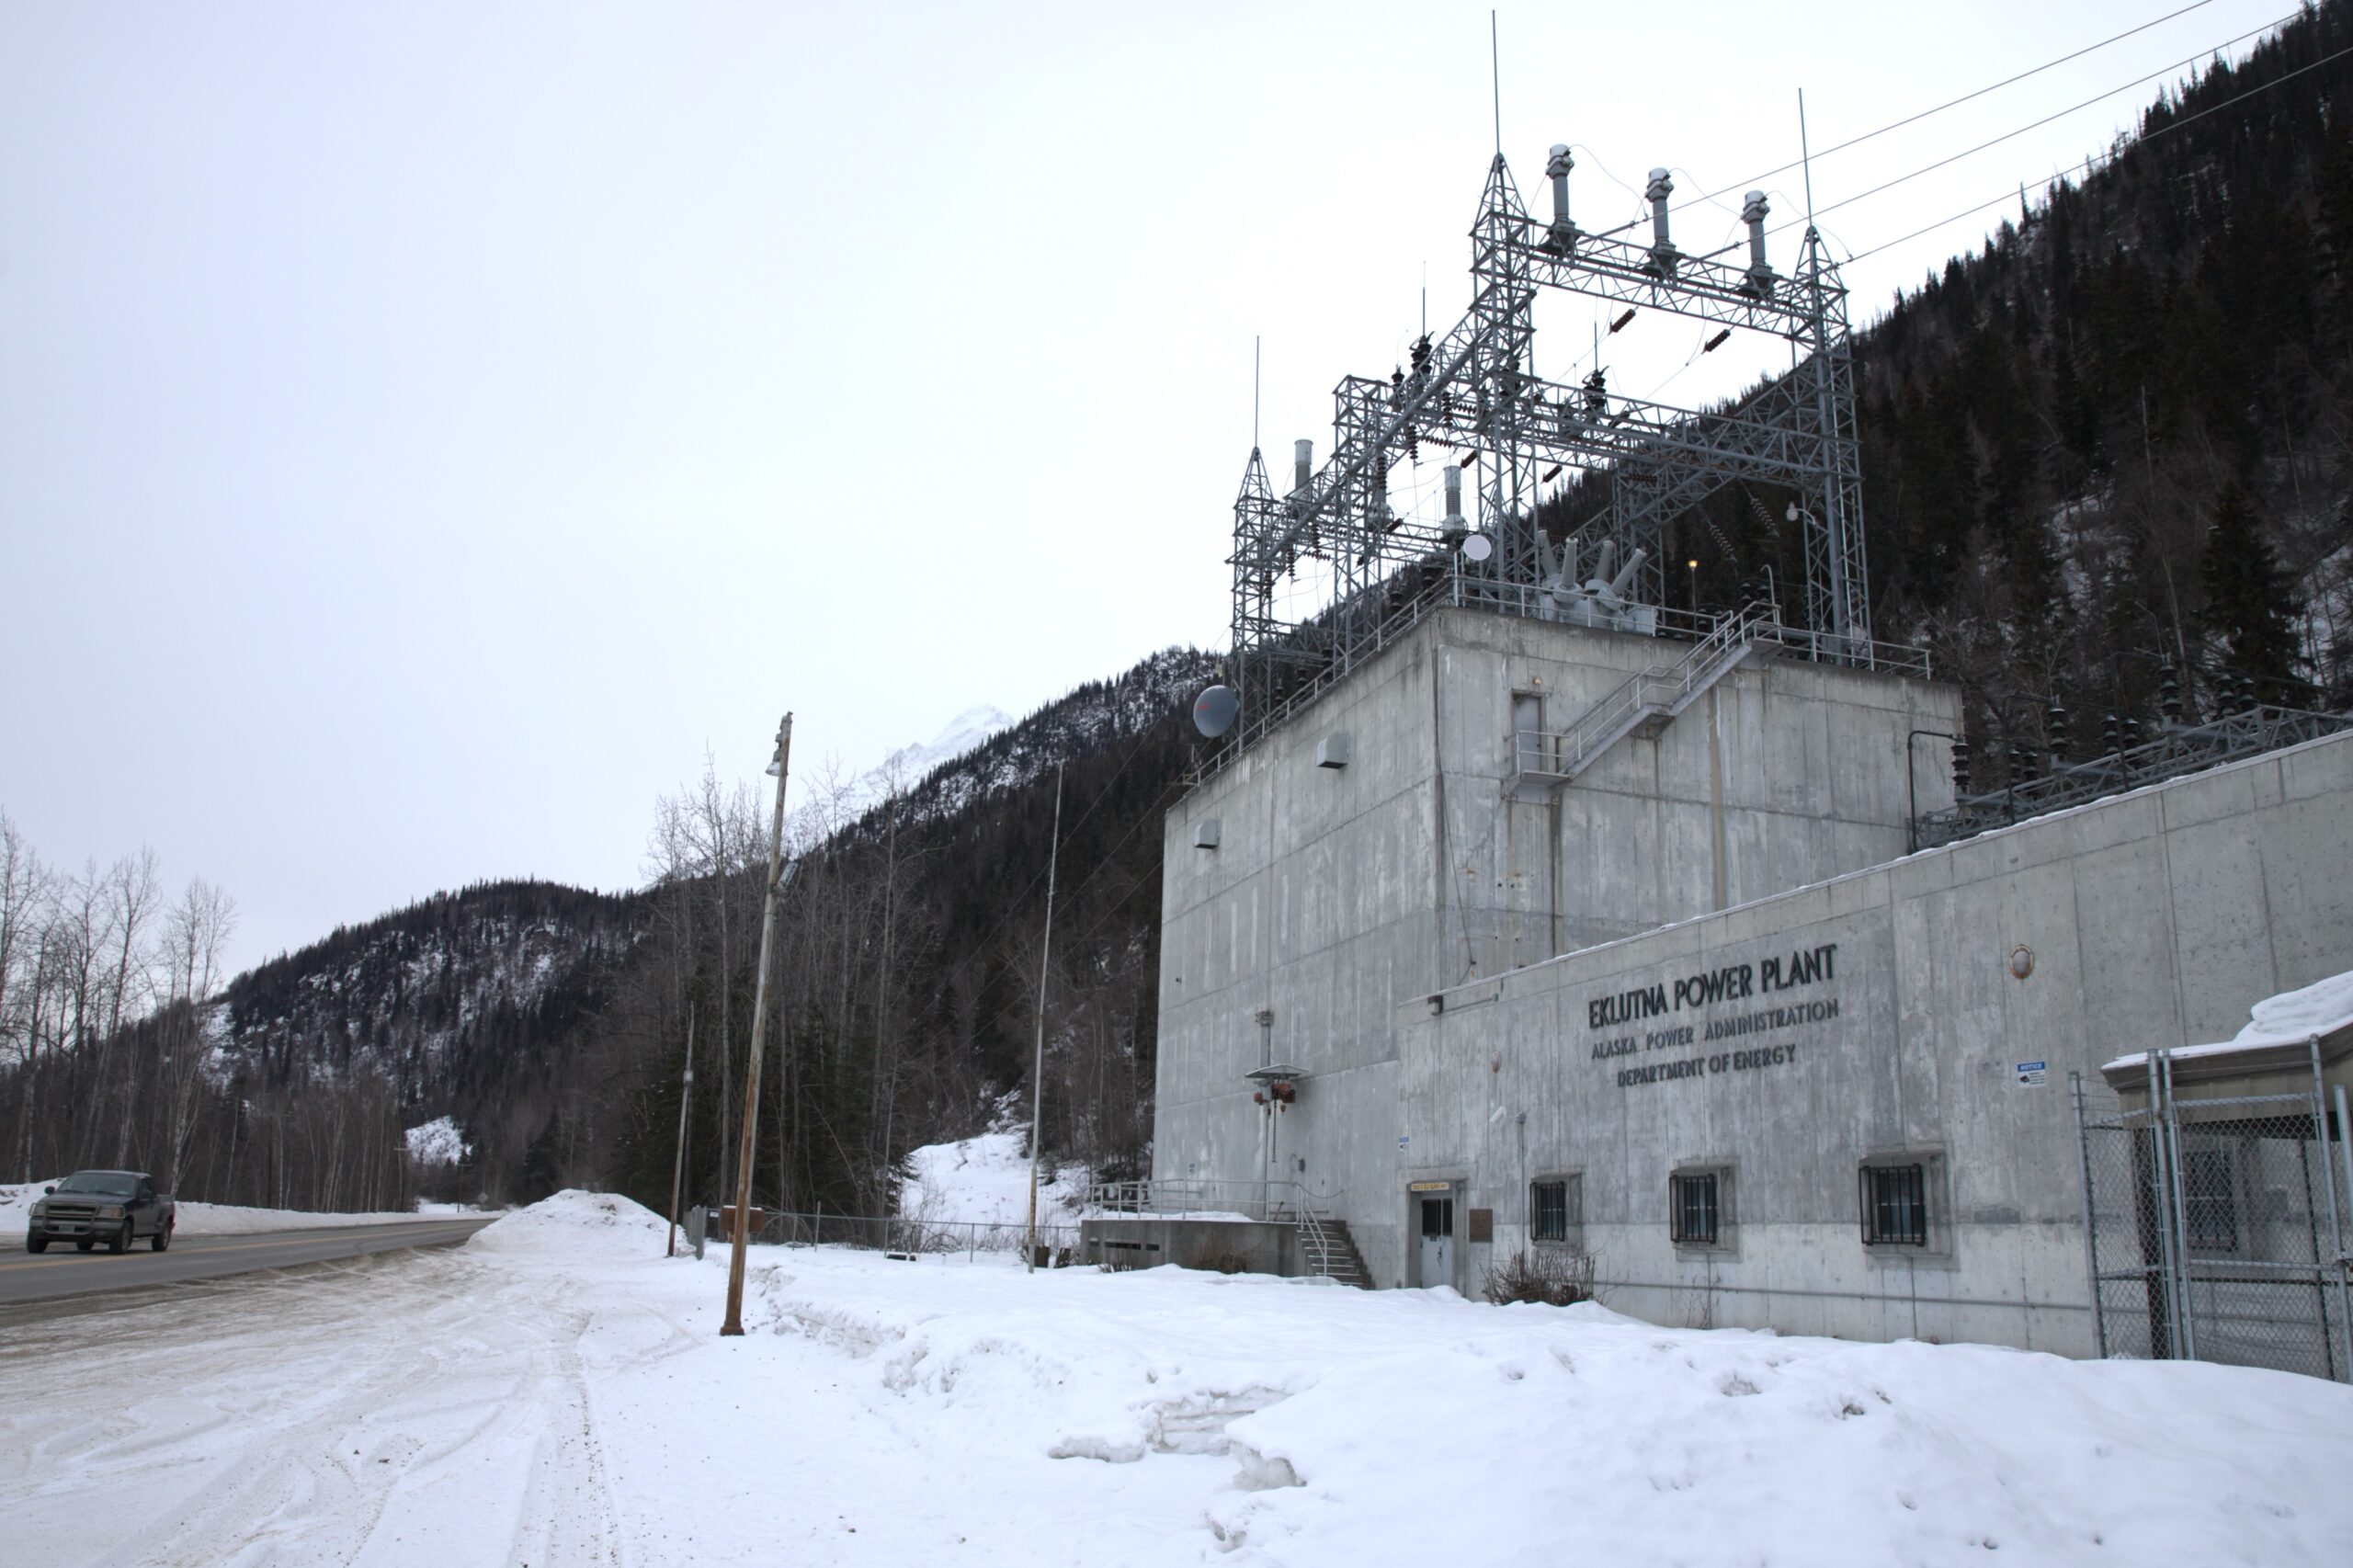 A gray concrete building labeled Eklutna Power Plant along a snowy road